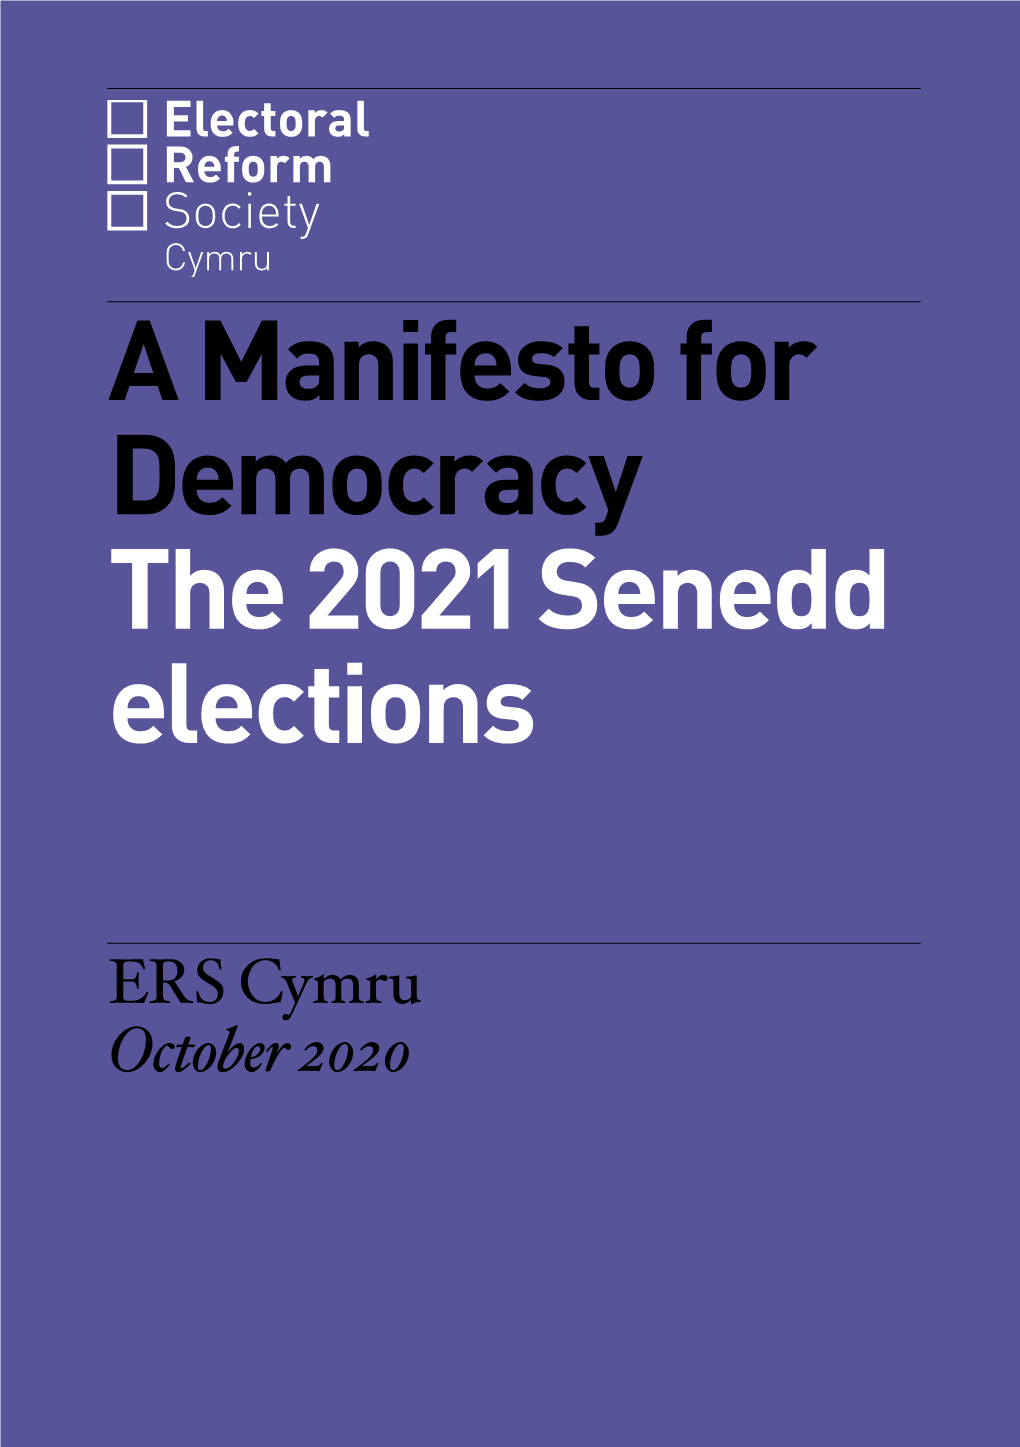 A Manifesto for Democracy the 2021 Senedd Elections